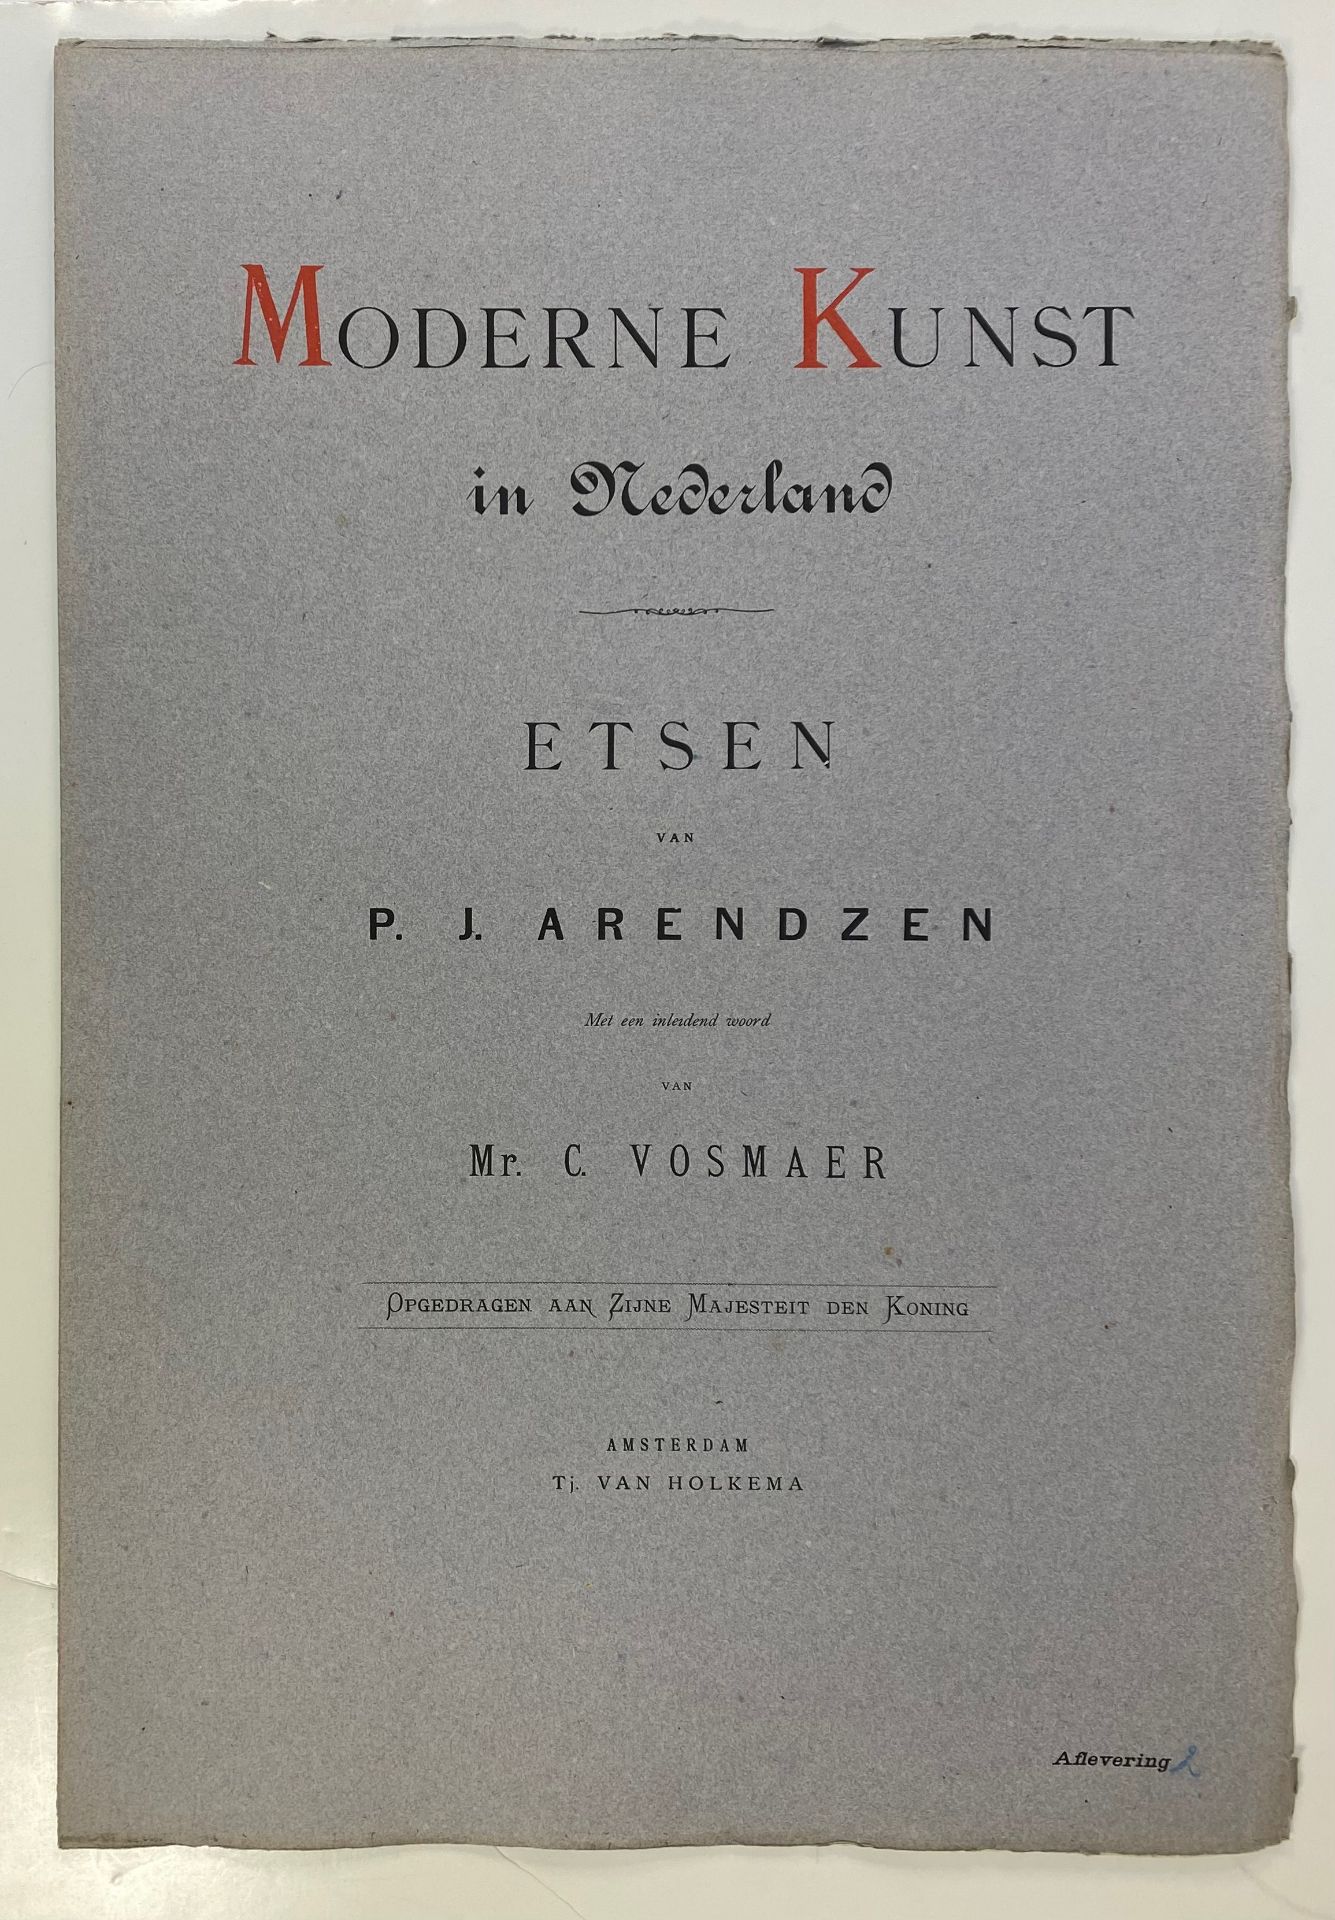 MODERNE KUNST in Nederland. Etsen van P.J. Arendzen. Introd. C. Vosmaer. Tekst